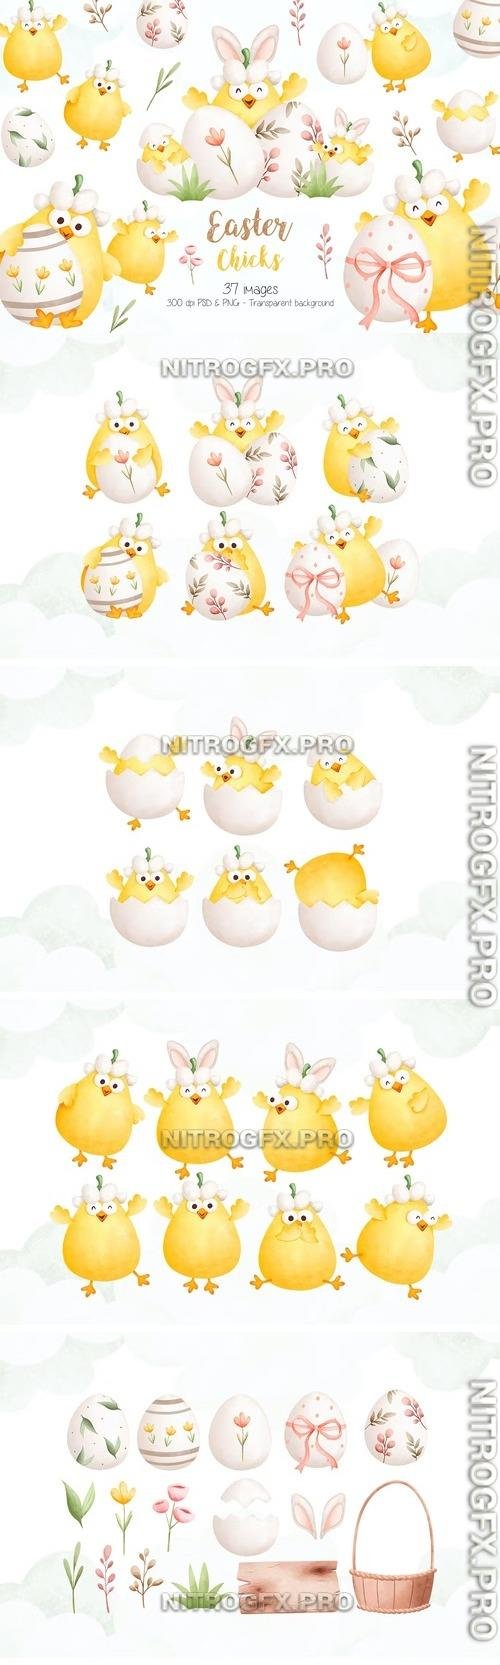 Easter Chicks and Easter Egg Clipart